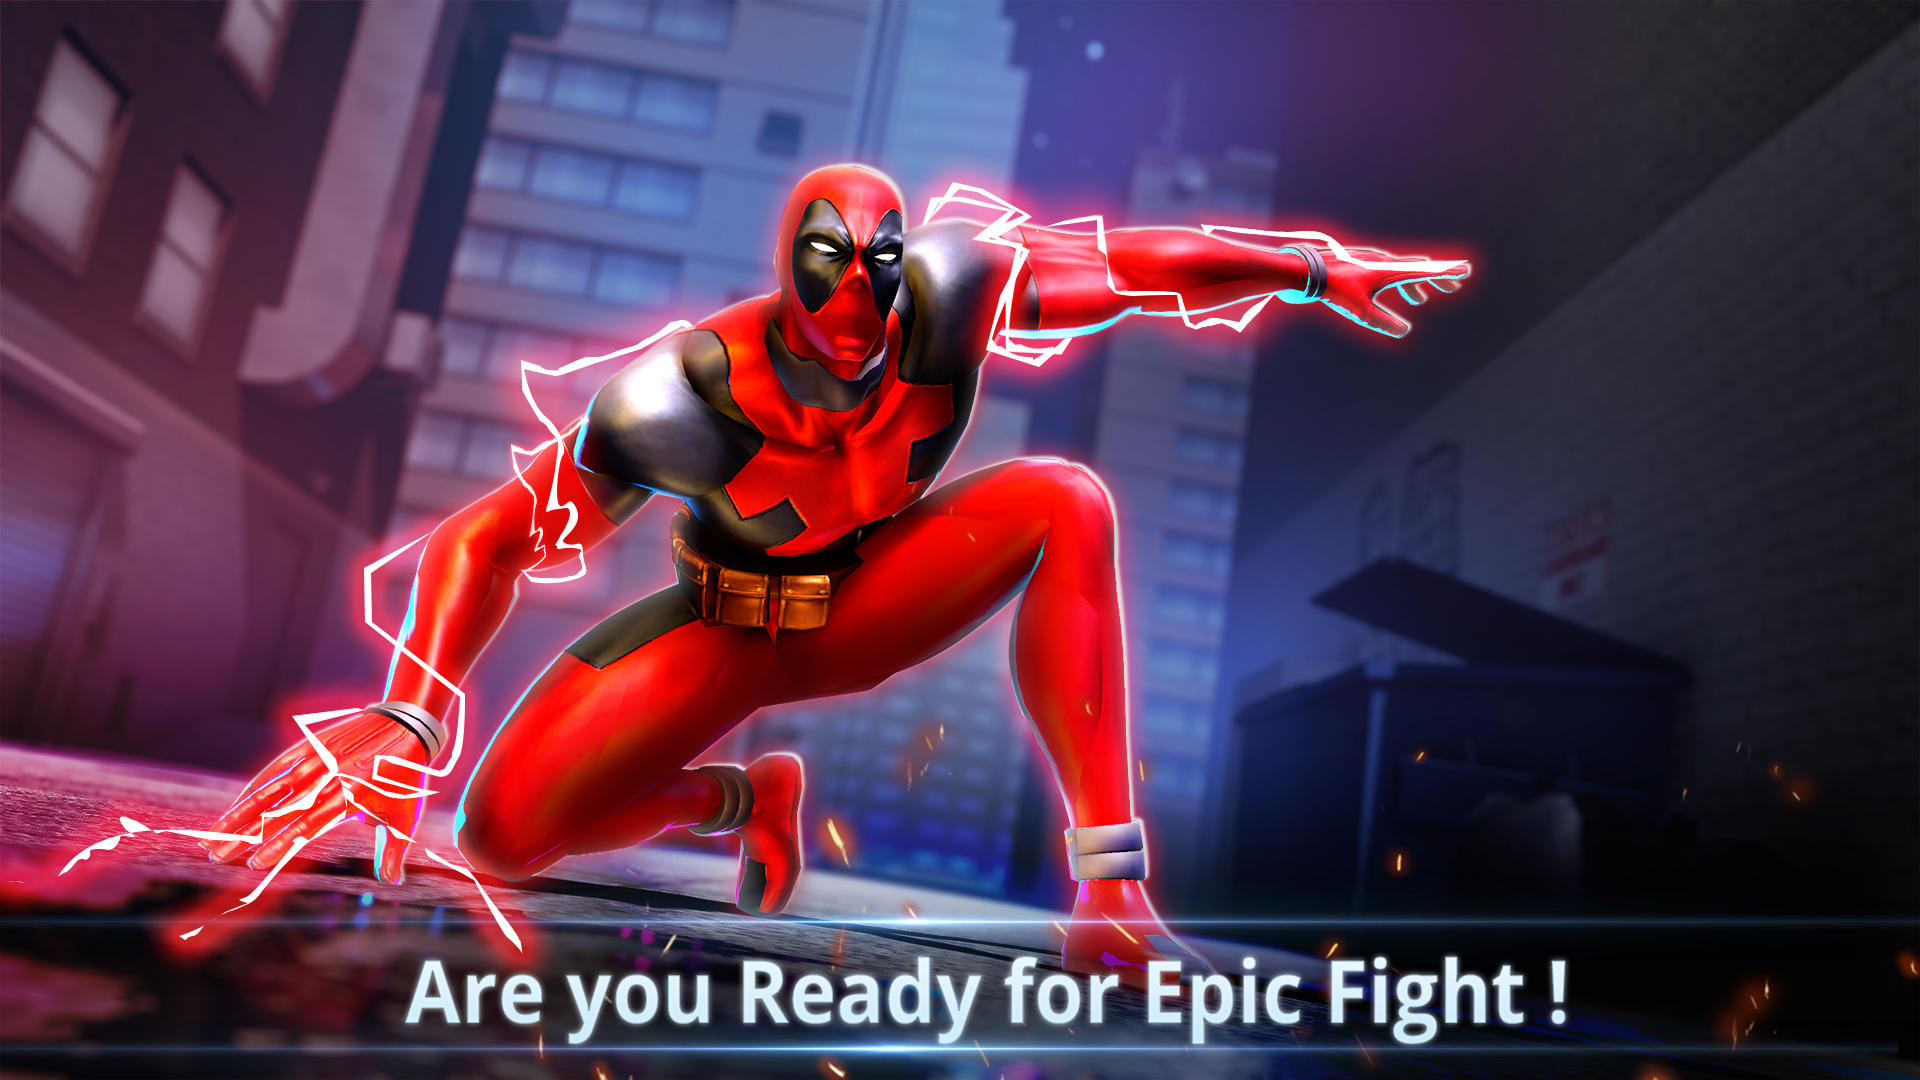 Spider Hero - Power Fighter screenshot game